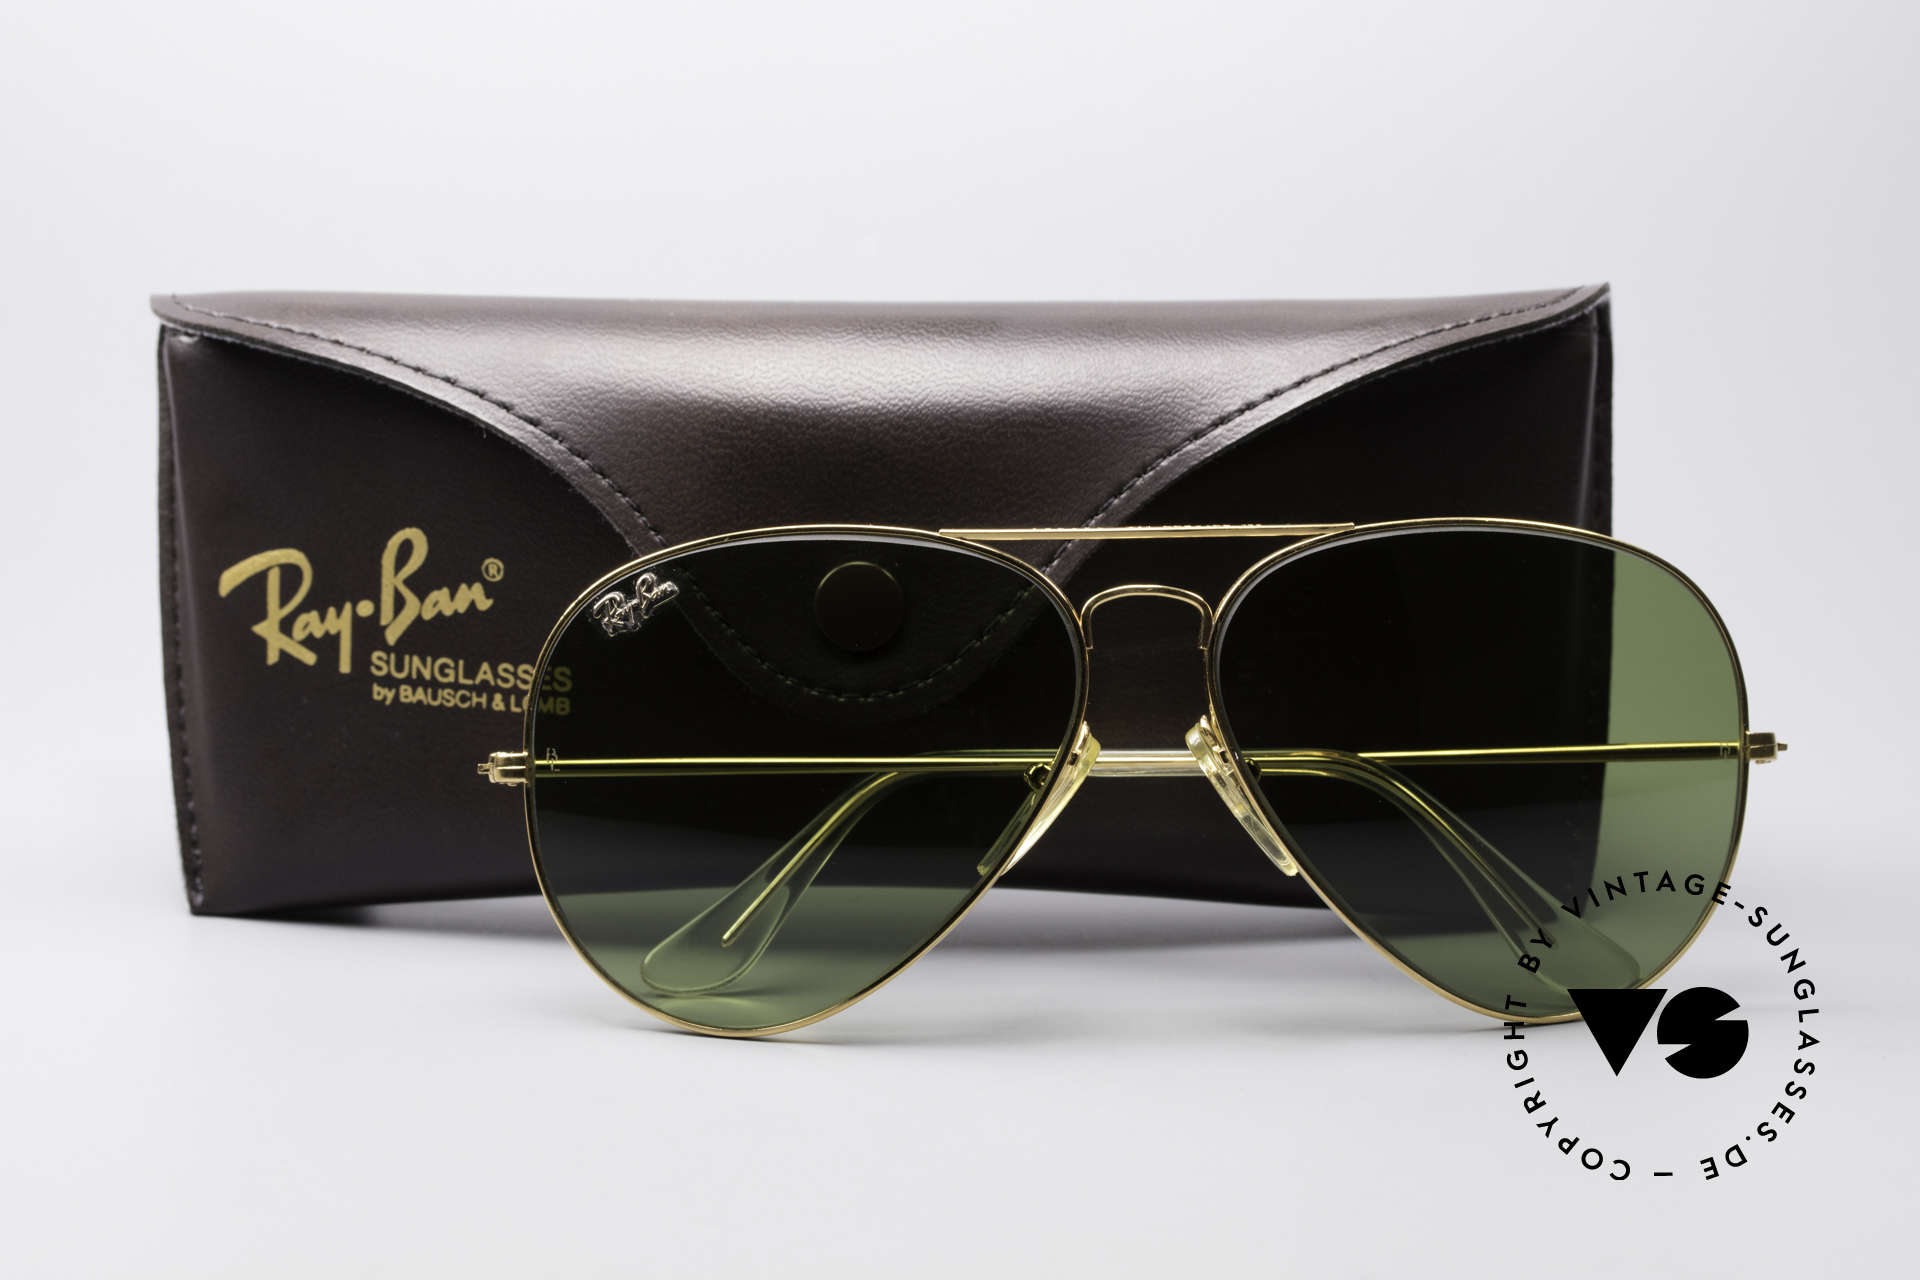 Sunglasses Ray Ban Large Metal II Elite Limited Edition USA Vintage